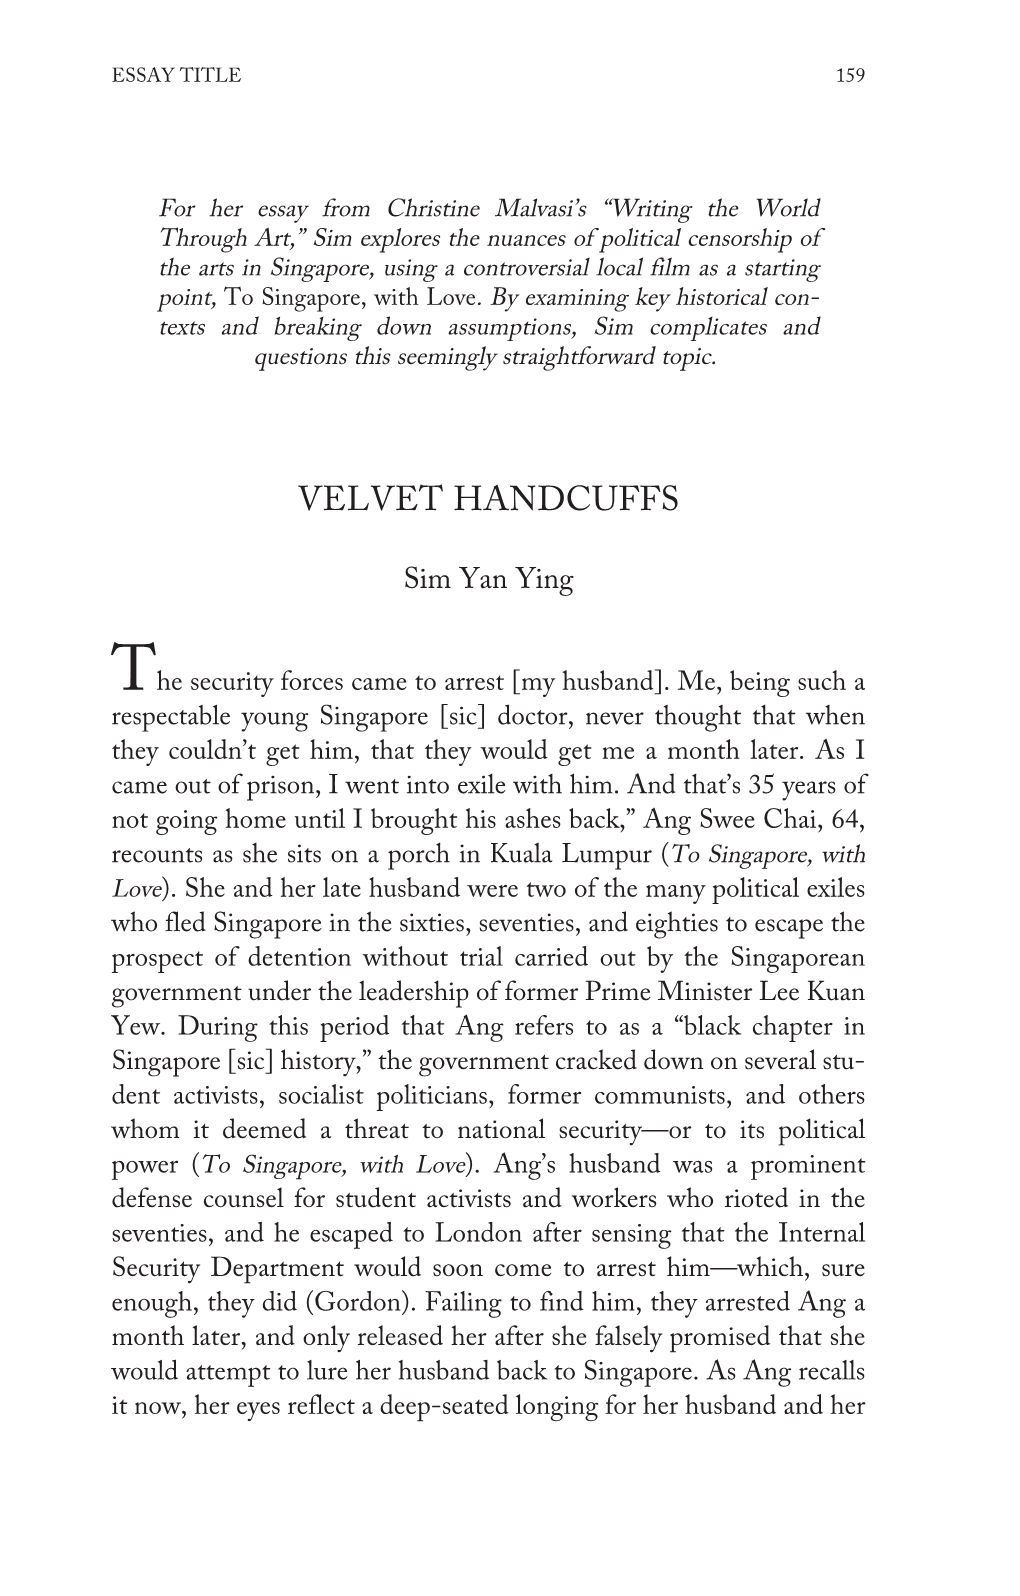 Velvet Handcuffs